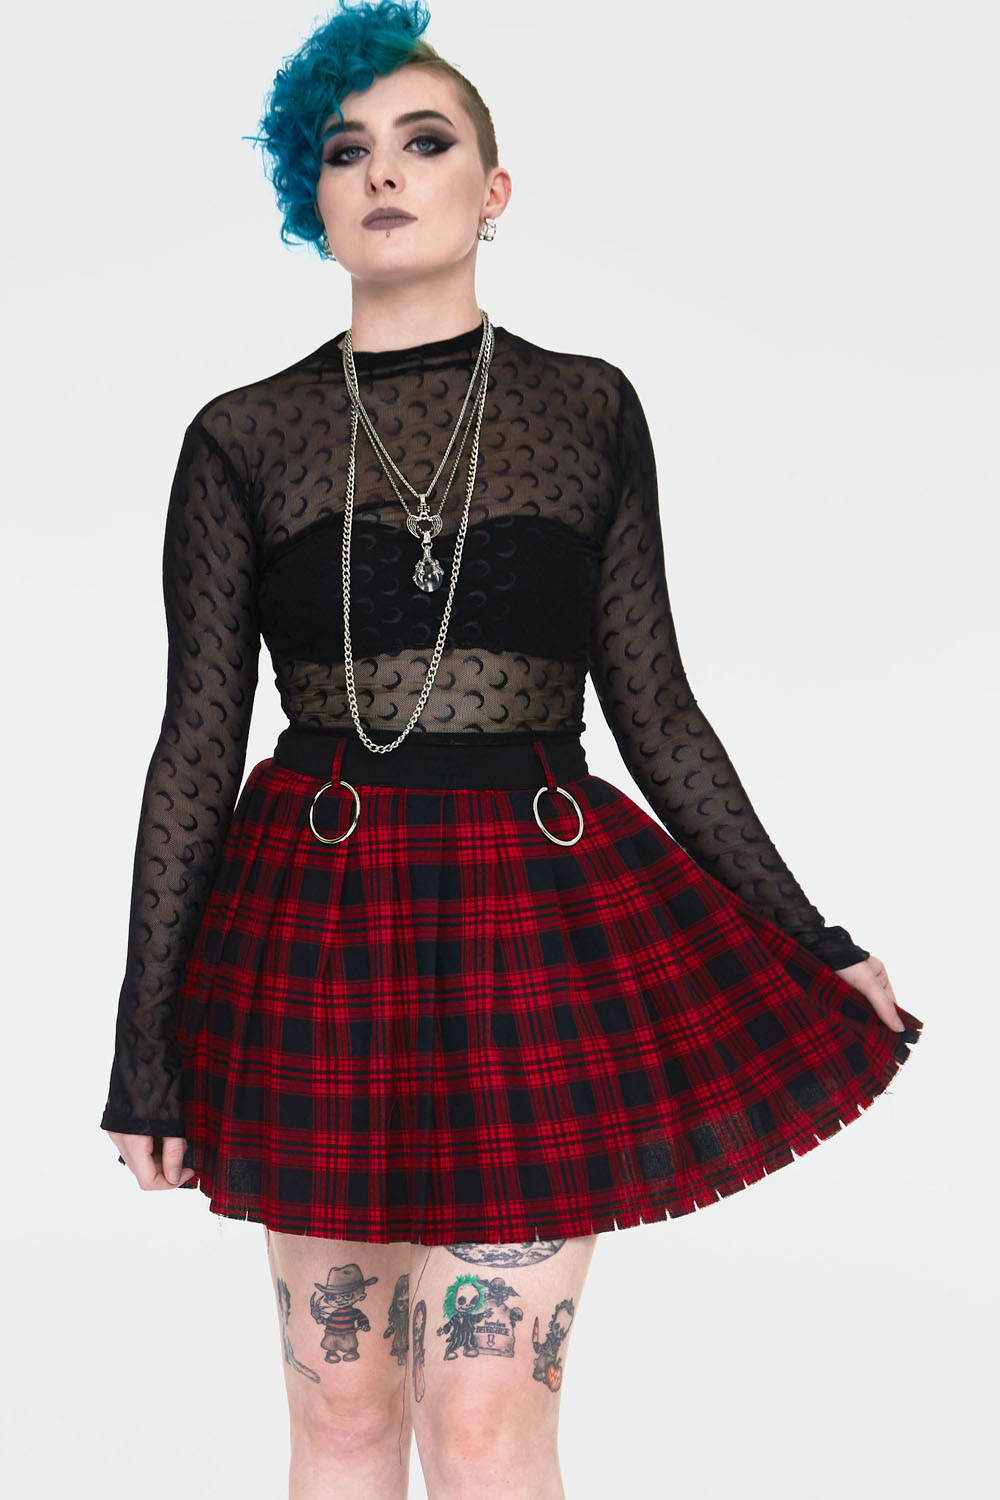 Teen Spirit Red Tartan Pleated Skirt | Alternative Clothing Store ...